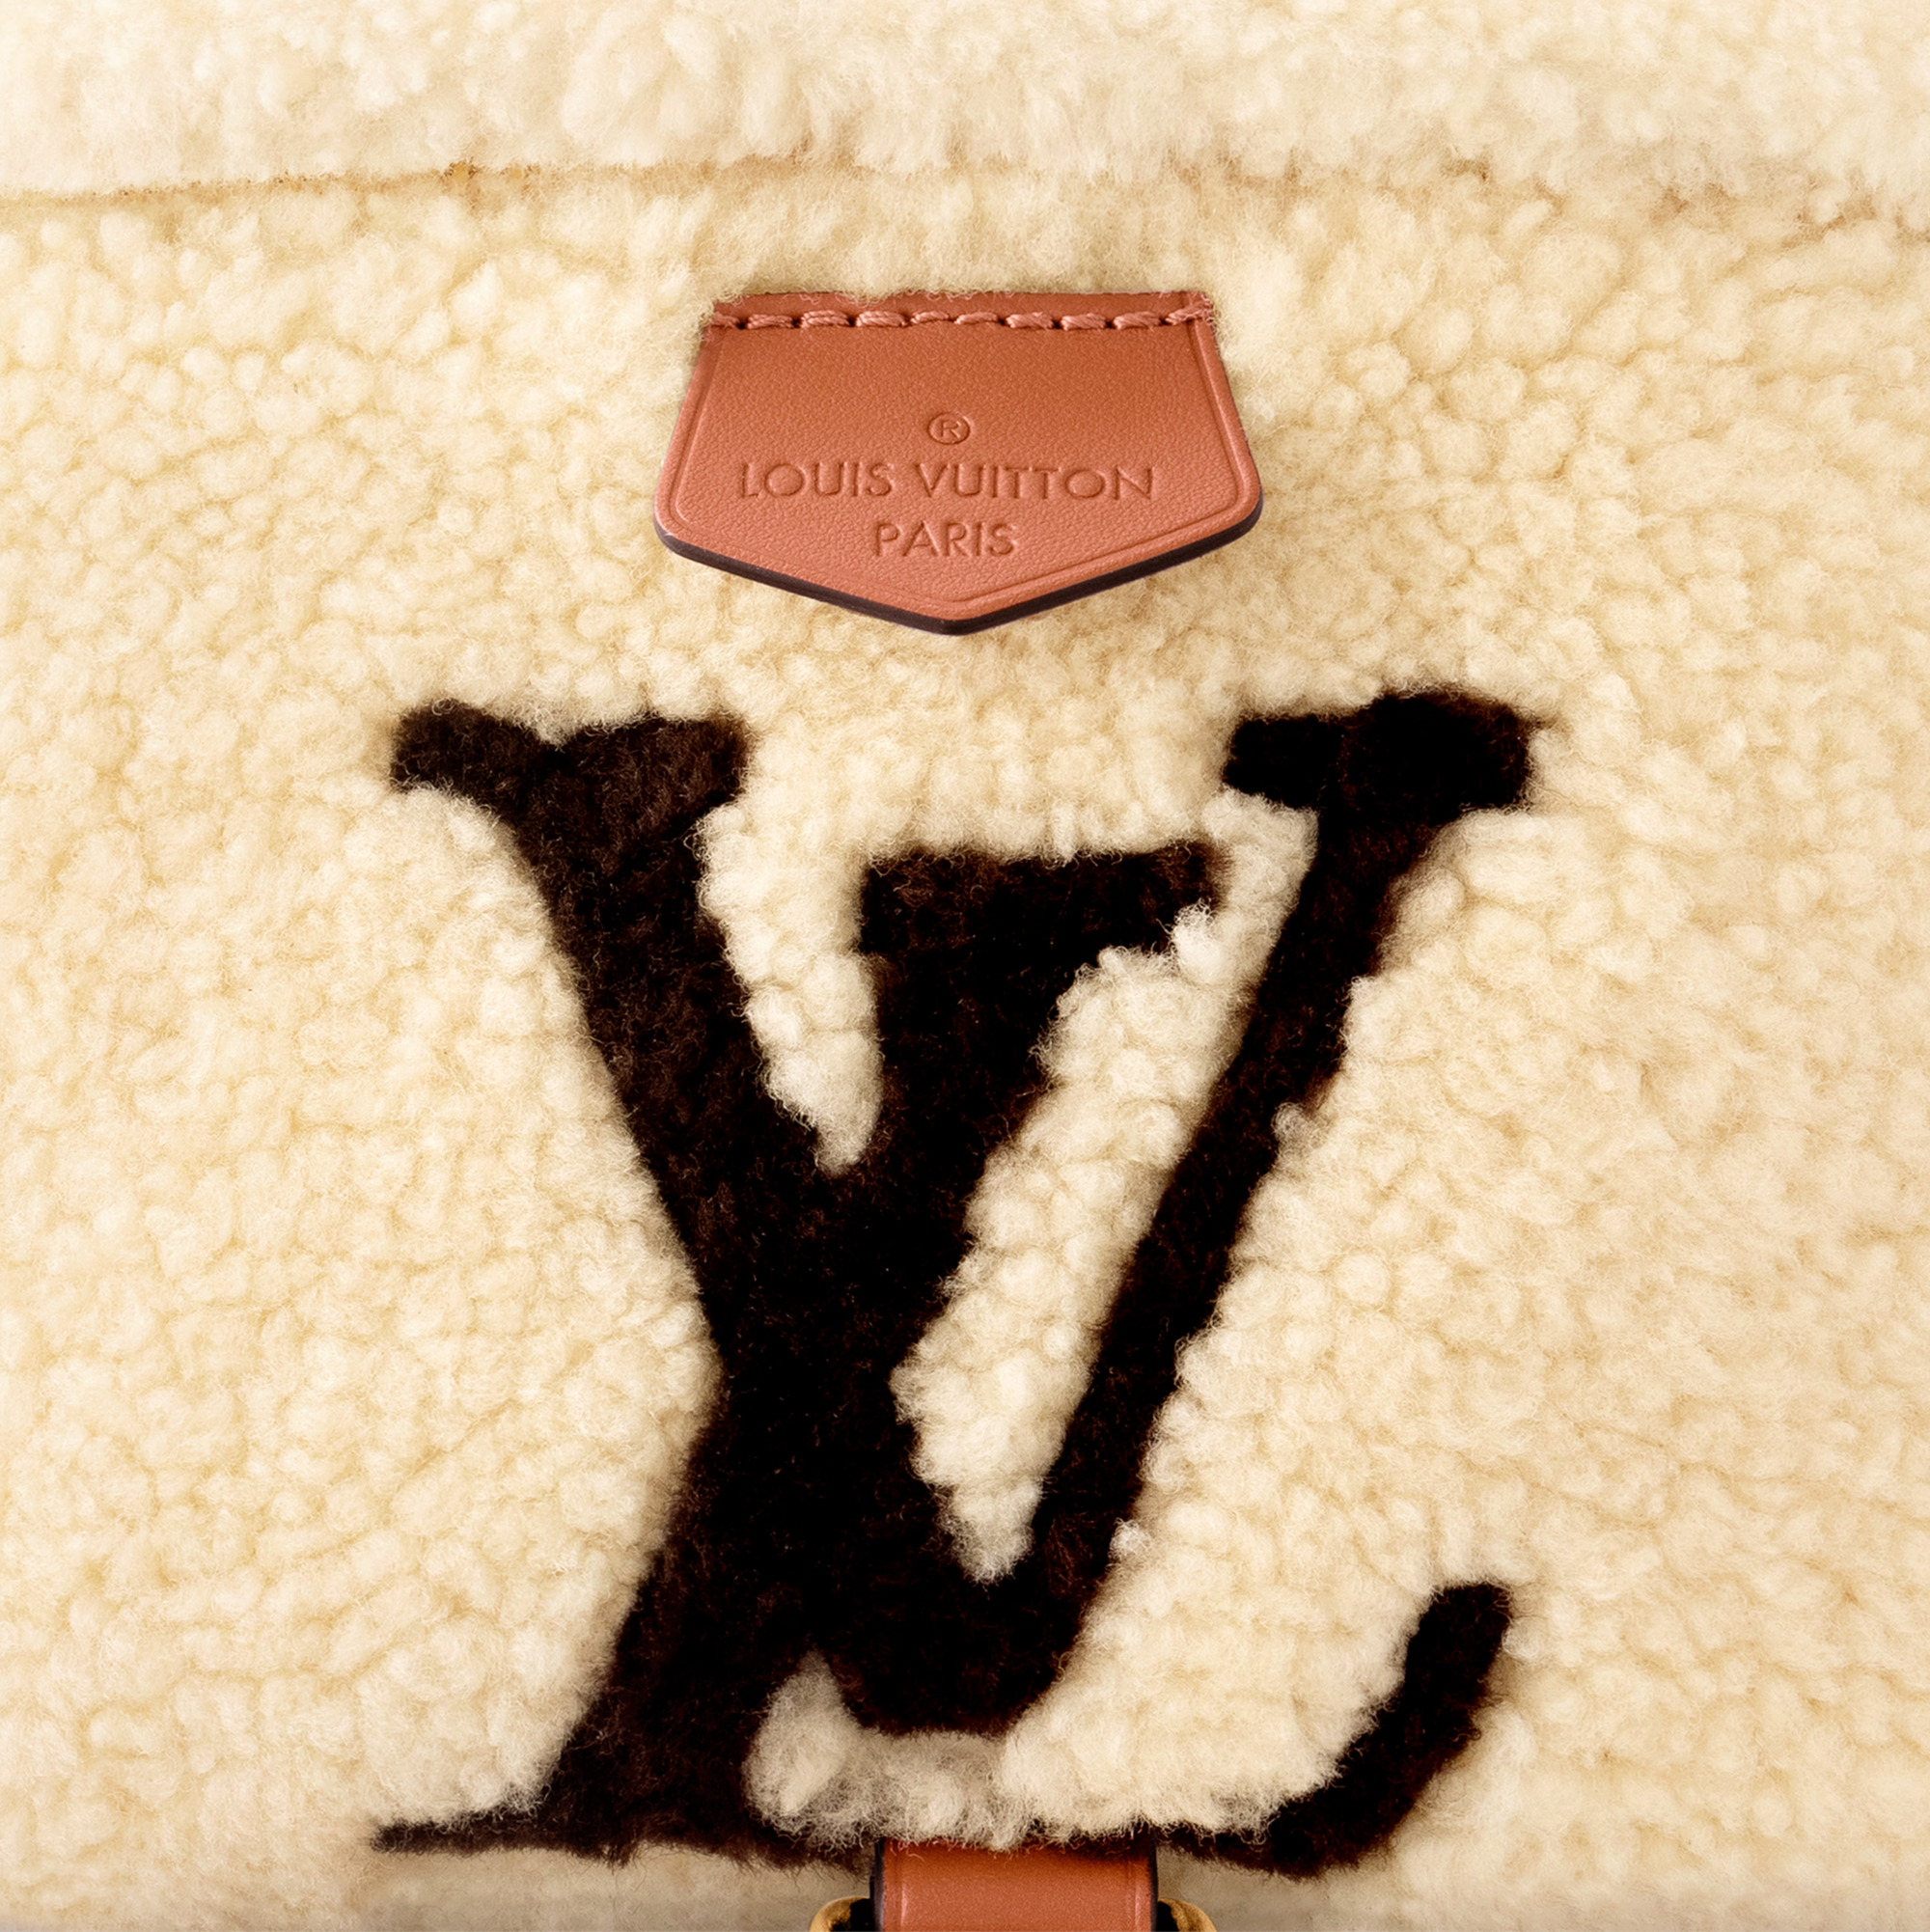 Louis Vuitton: The New Louis Vuitton Ski Collection: A Dynamic